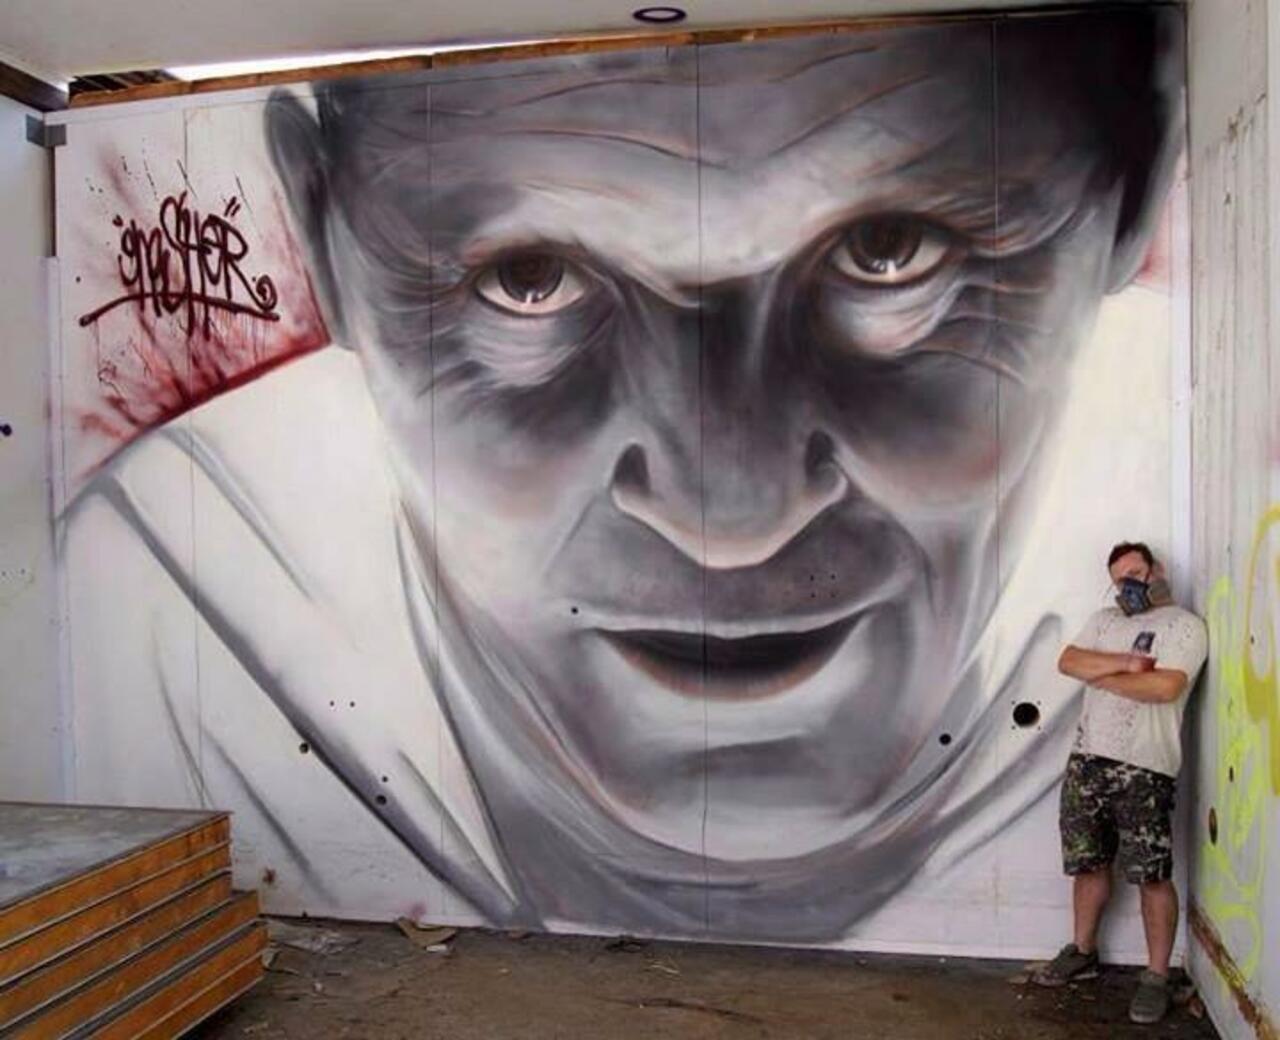 Artist @GnasherMurals new awesome Street Art portrait of Hannibal Lector #art #graffiti #mural #streetart http://t.co/lZuxdlBFst